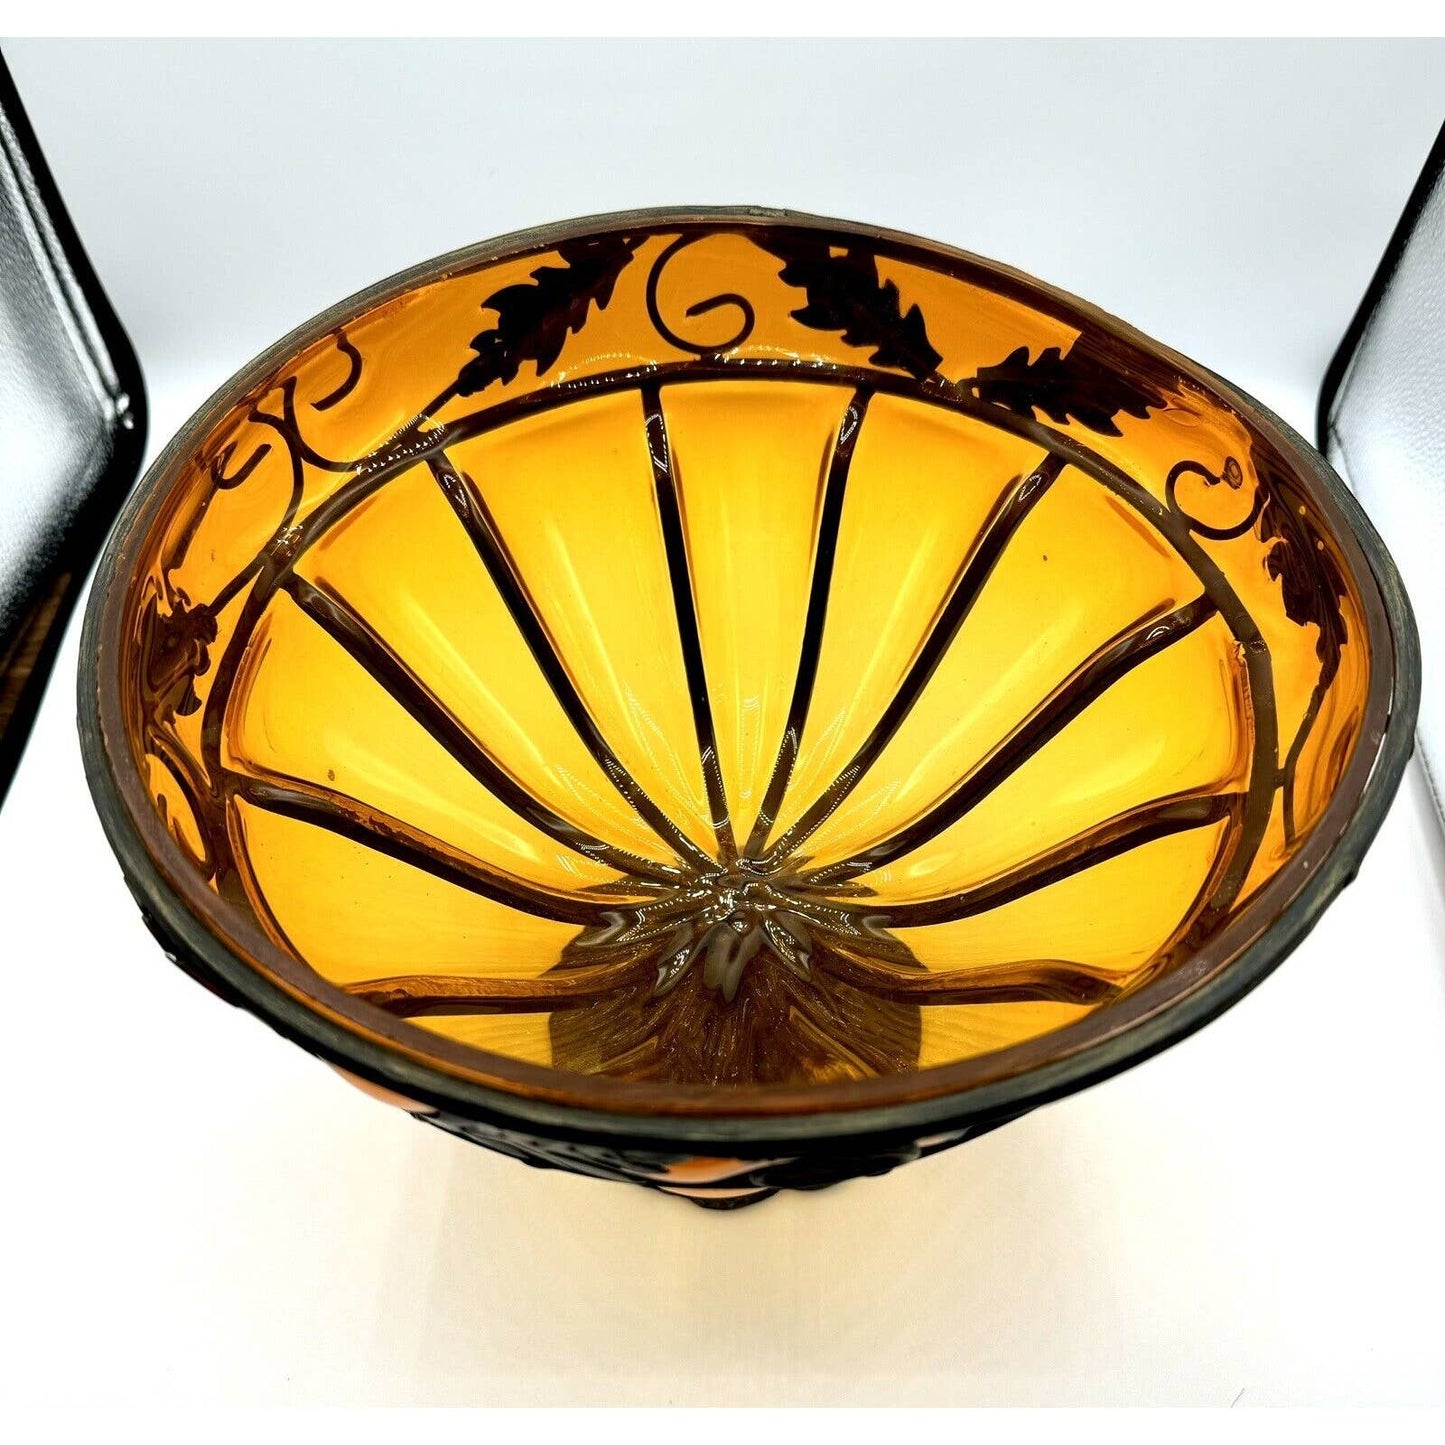 UnbrandedHand blown Amber Glass bubble bowl centerpiece Metal Cage Large Leaves Iron Base - Black Dog Vintage